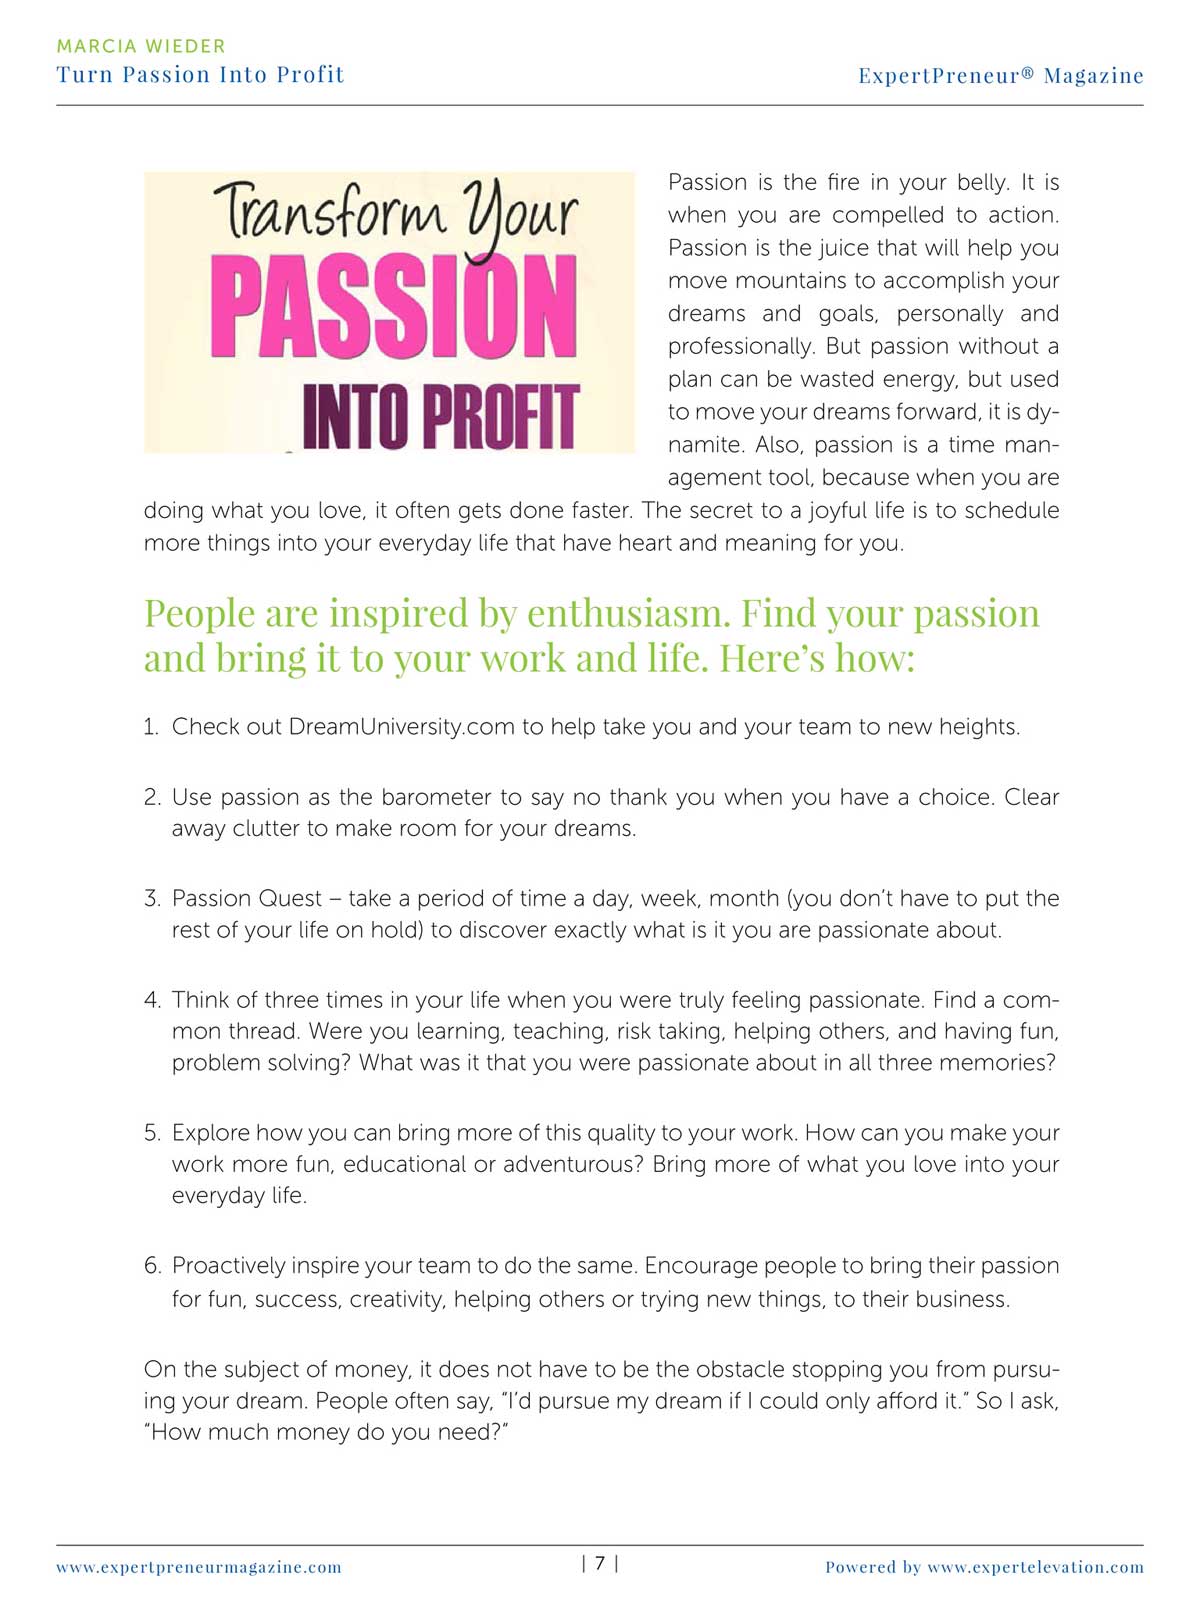 ExpertPrenuer Magazine - Turn Passion Into Profit (Page 3)